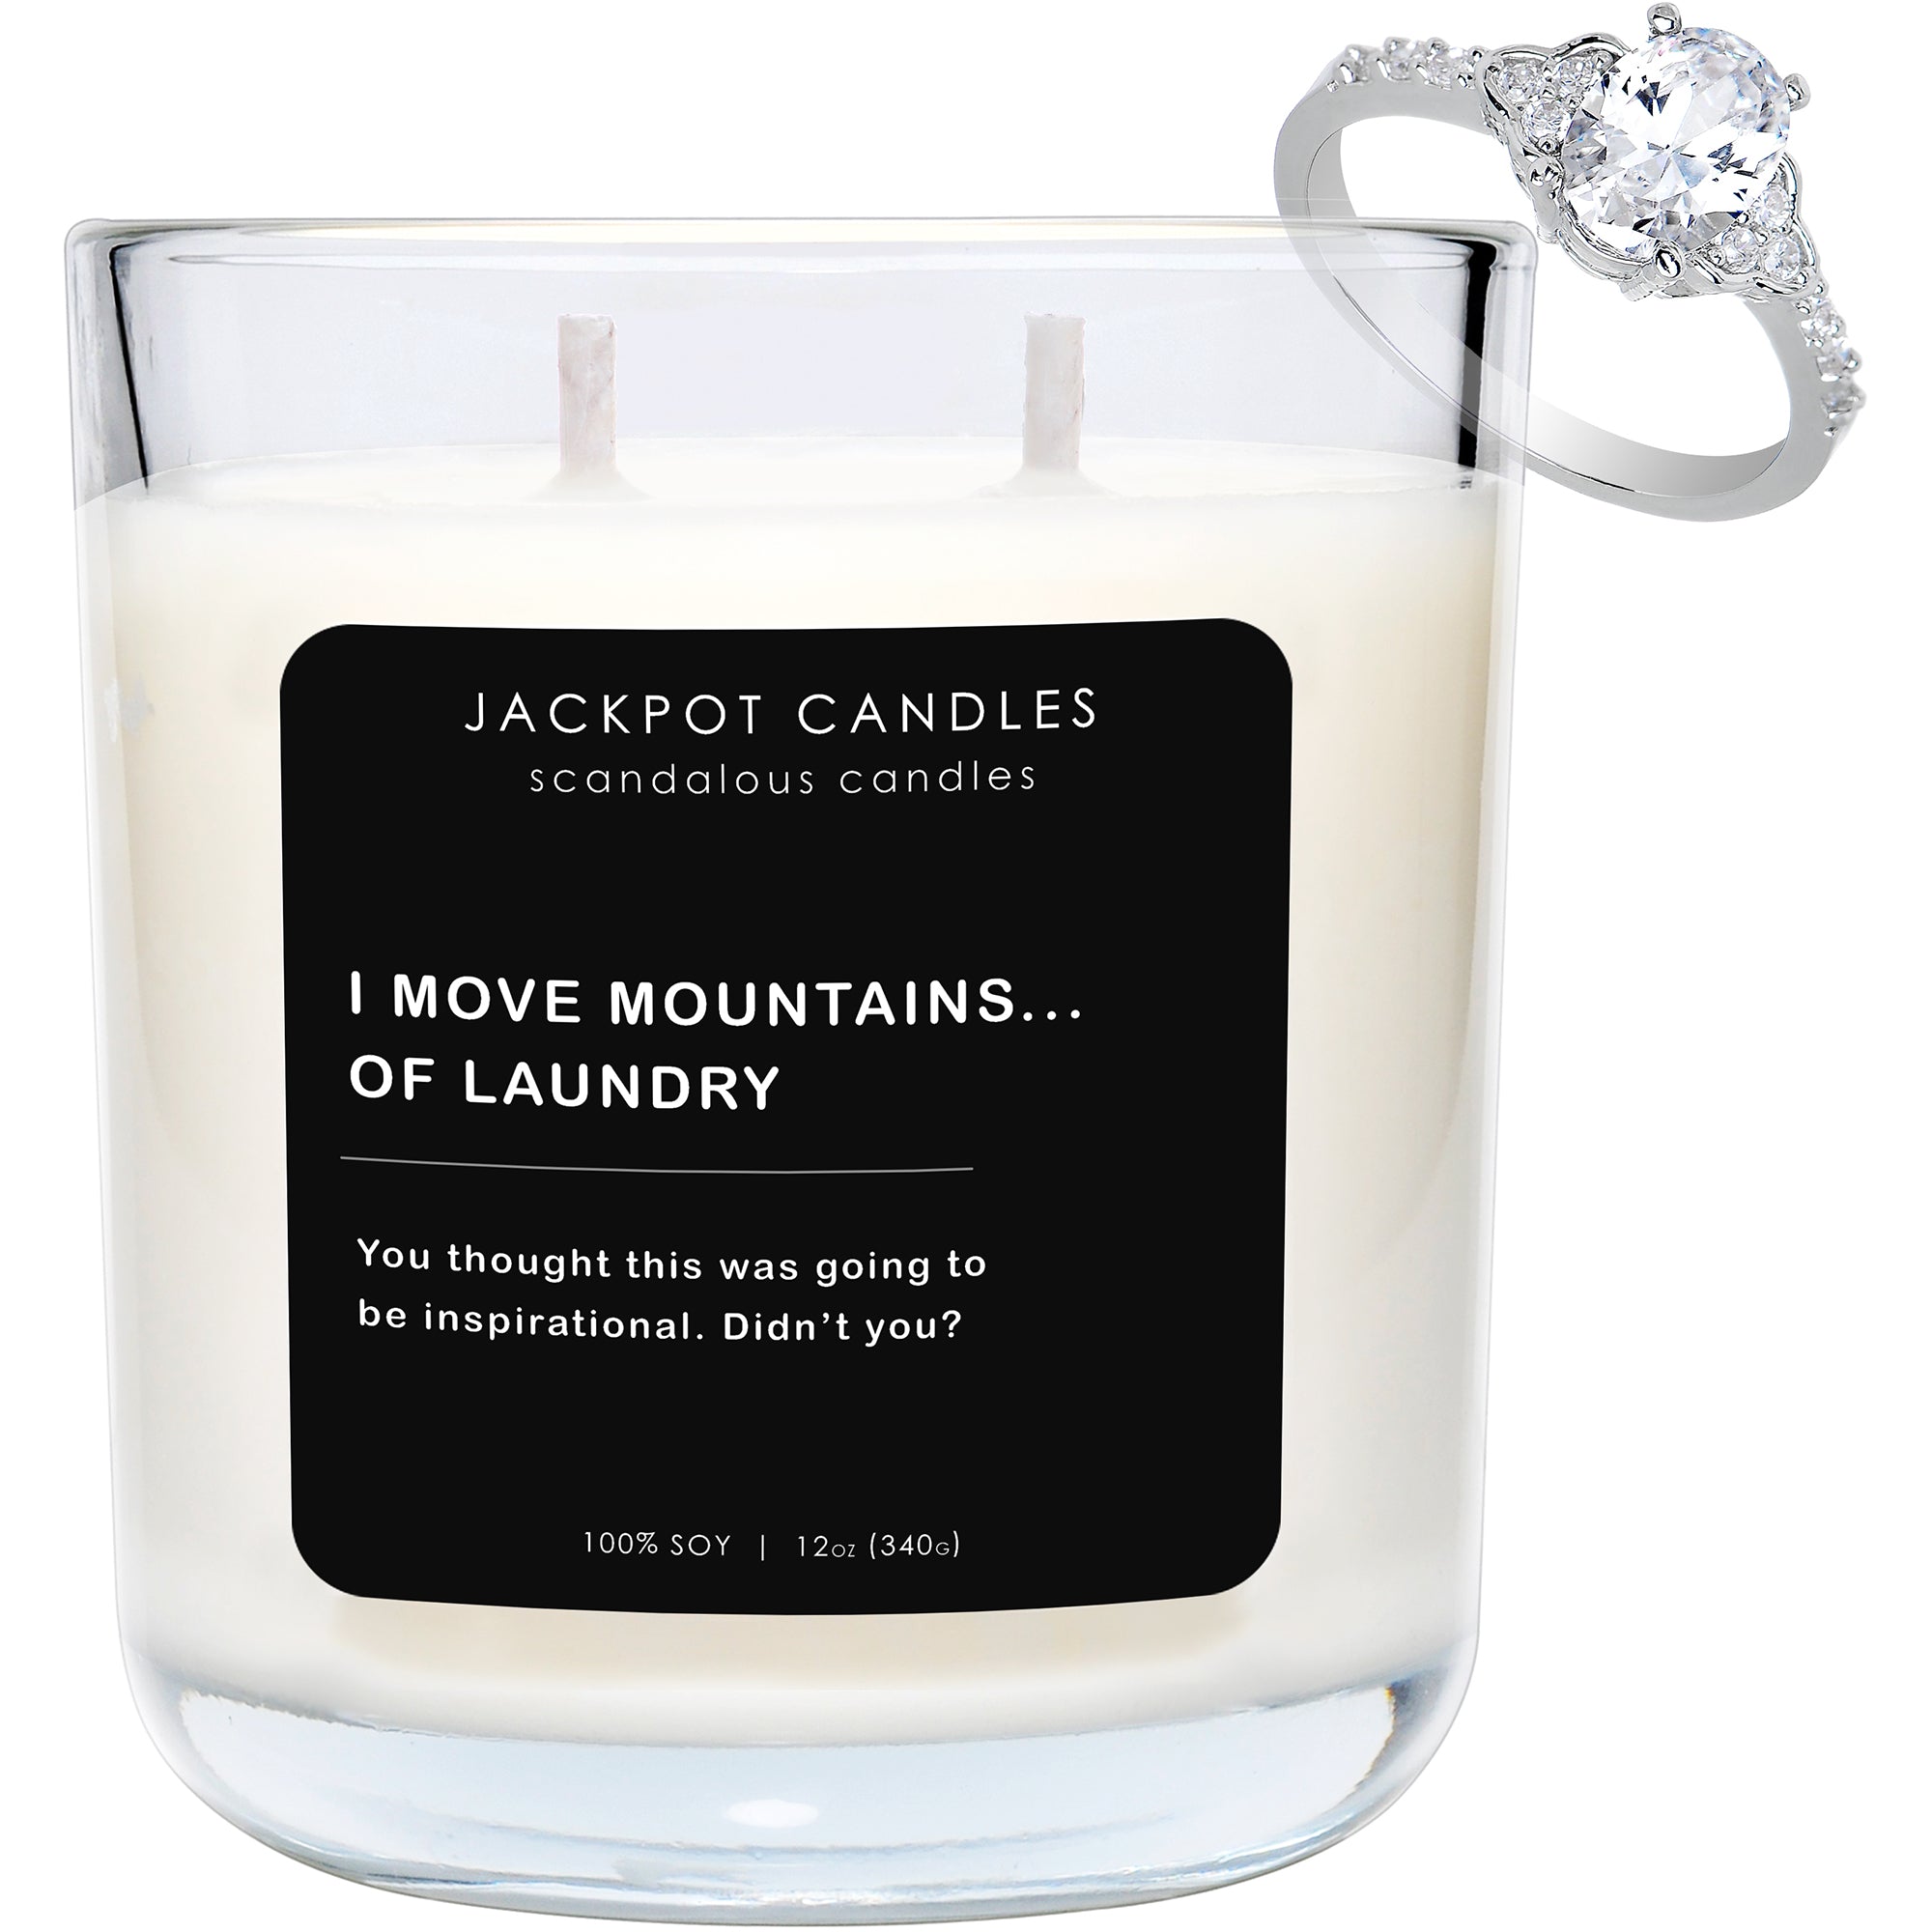 I Move Mountains of Laundry Scandalous Candle